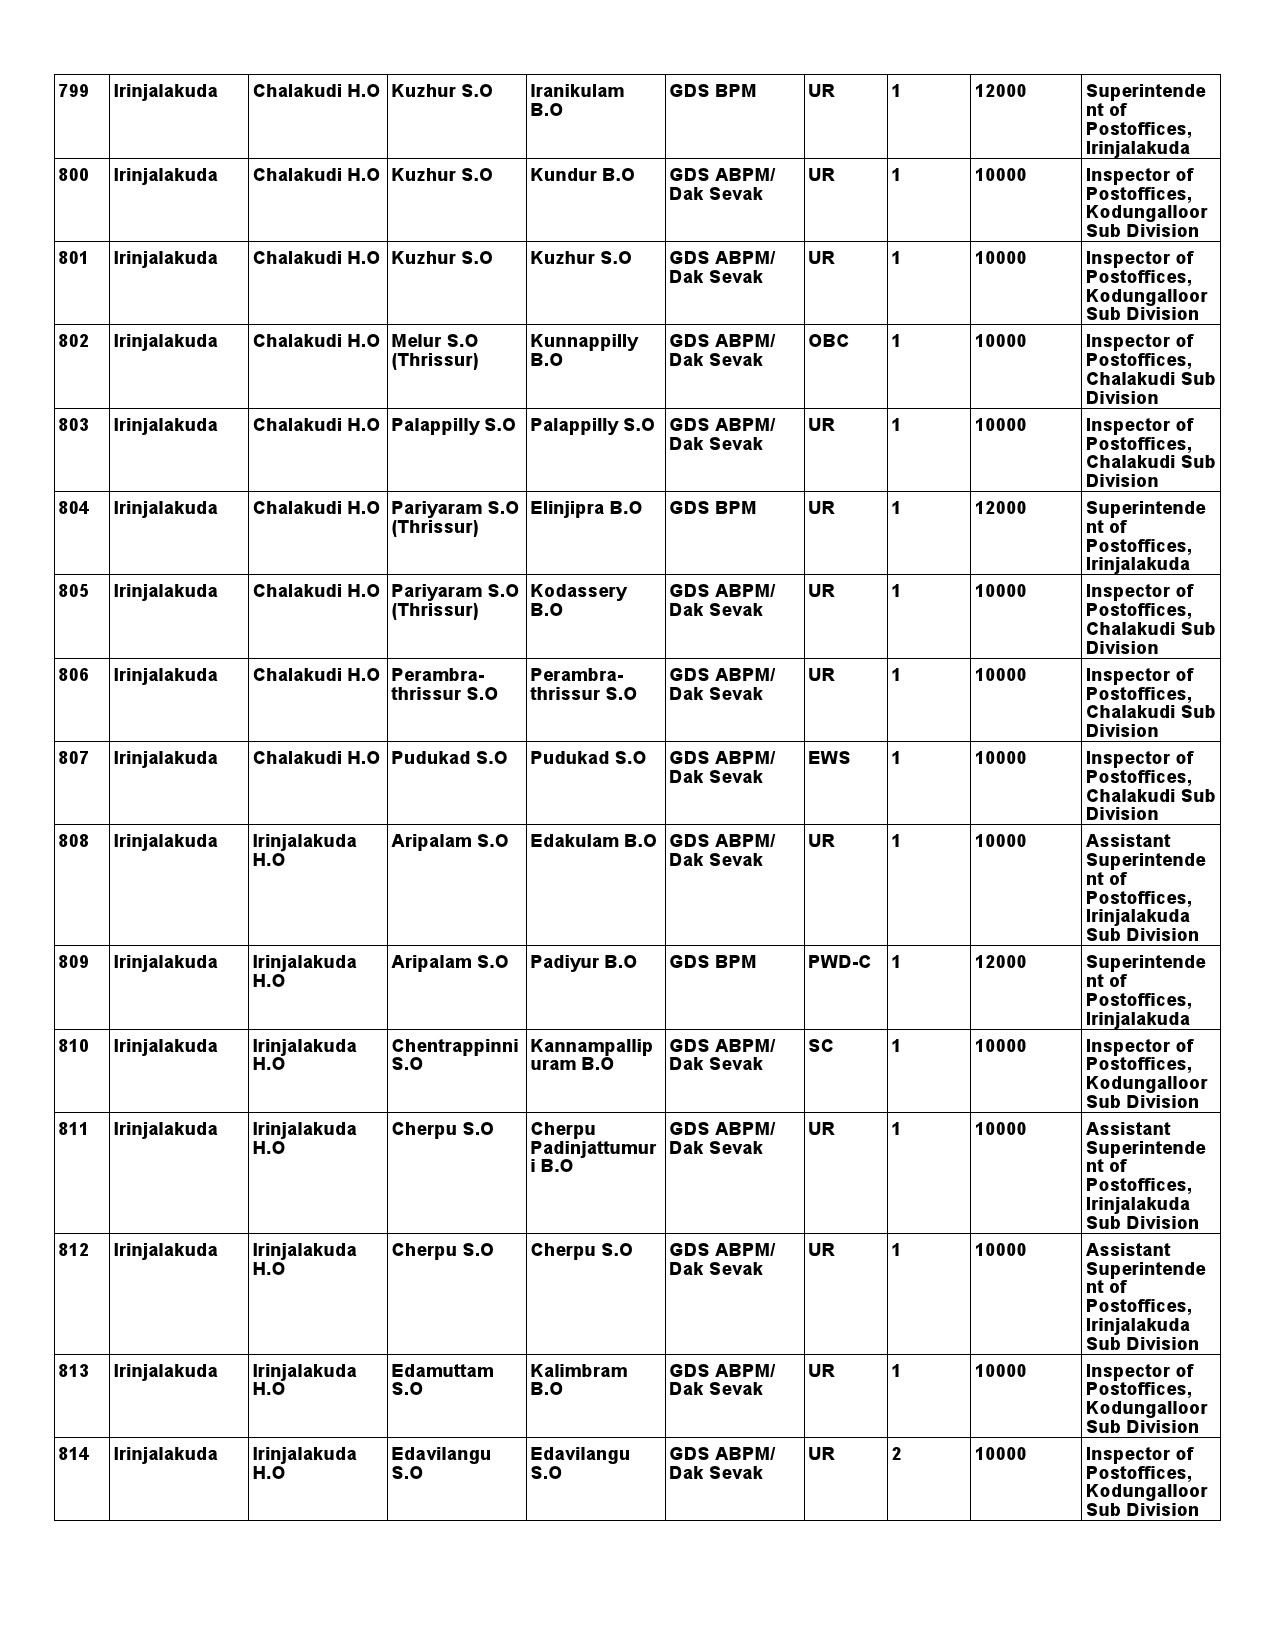 Kerala Postal Circle GDS Recruitment 2021 notification - Notification Image 71